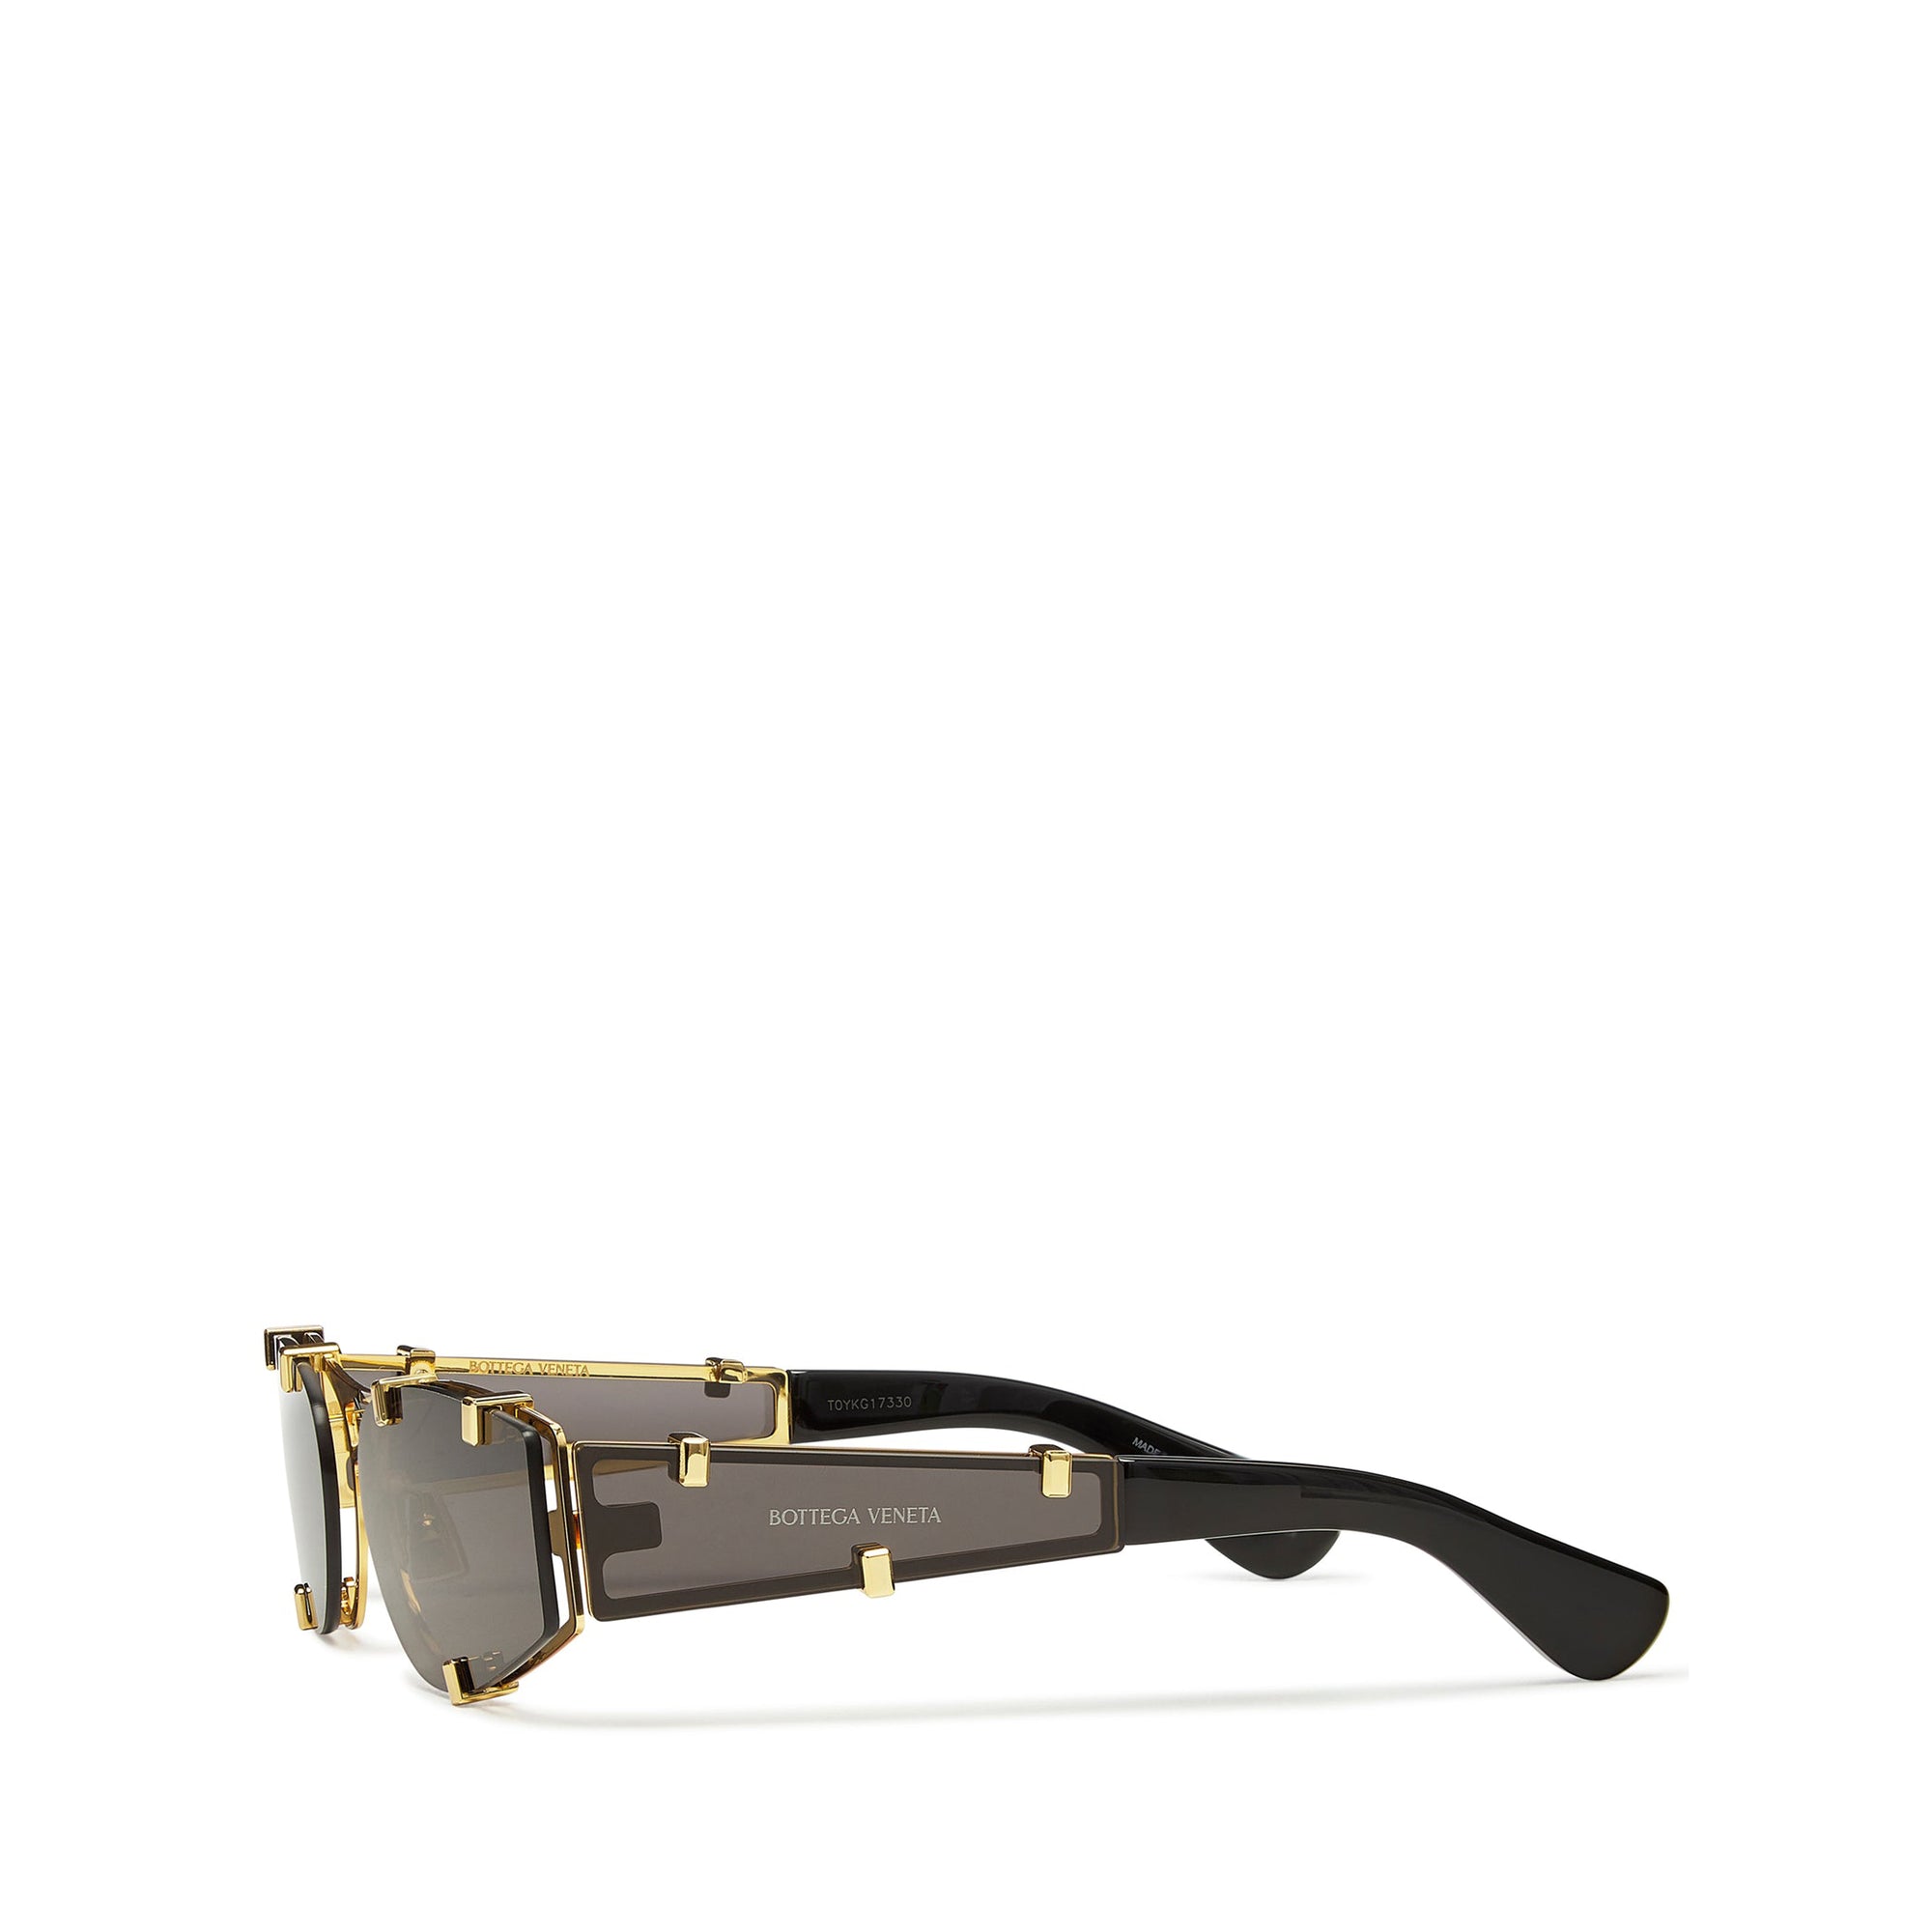 Bottega Veneta - Women’s Cat Eye Sunglasses - (Black)